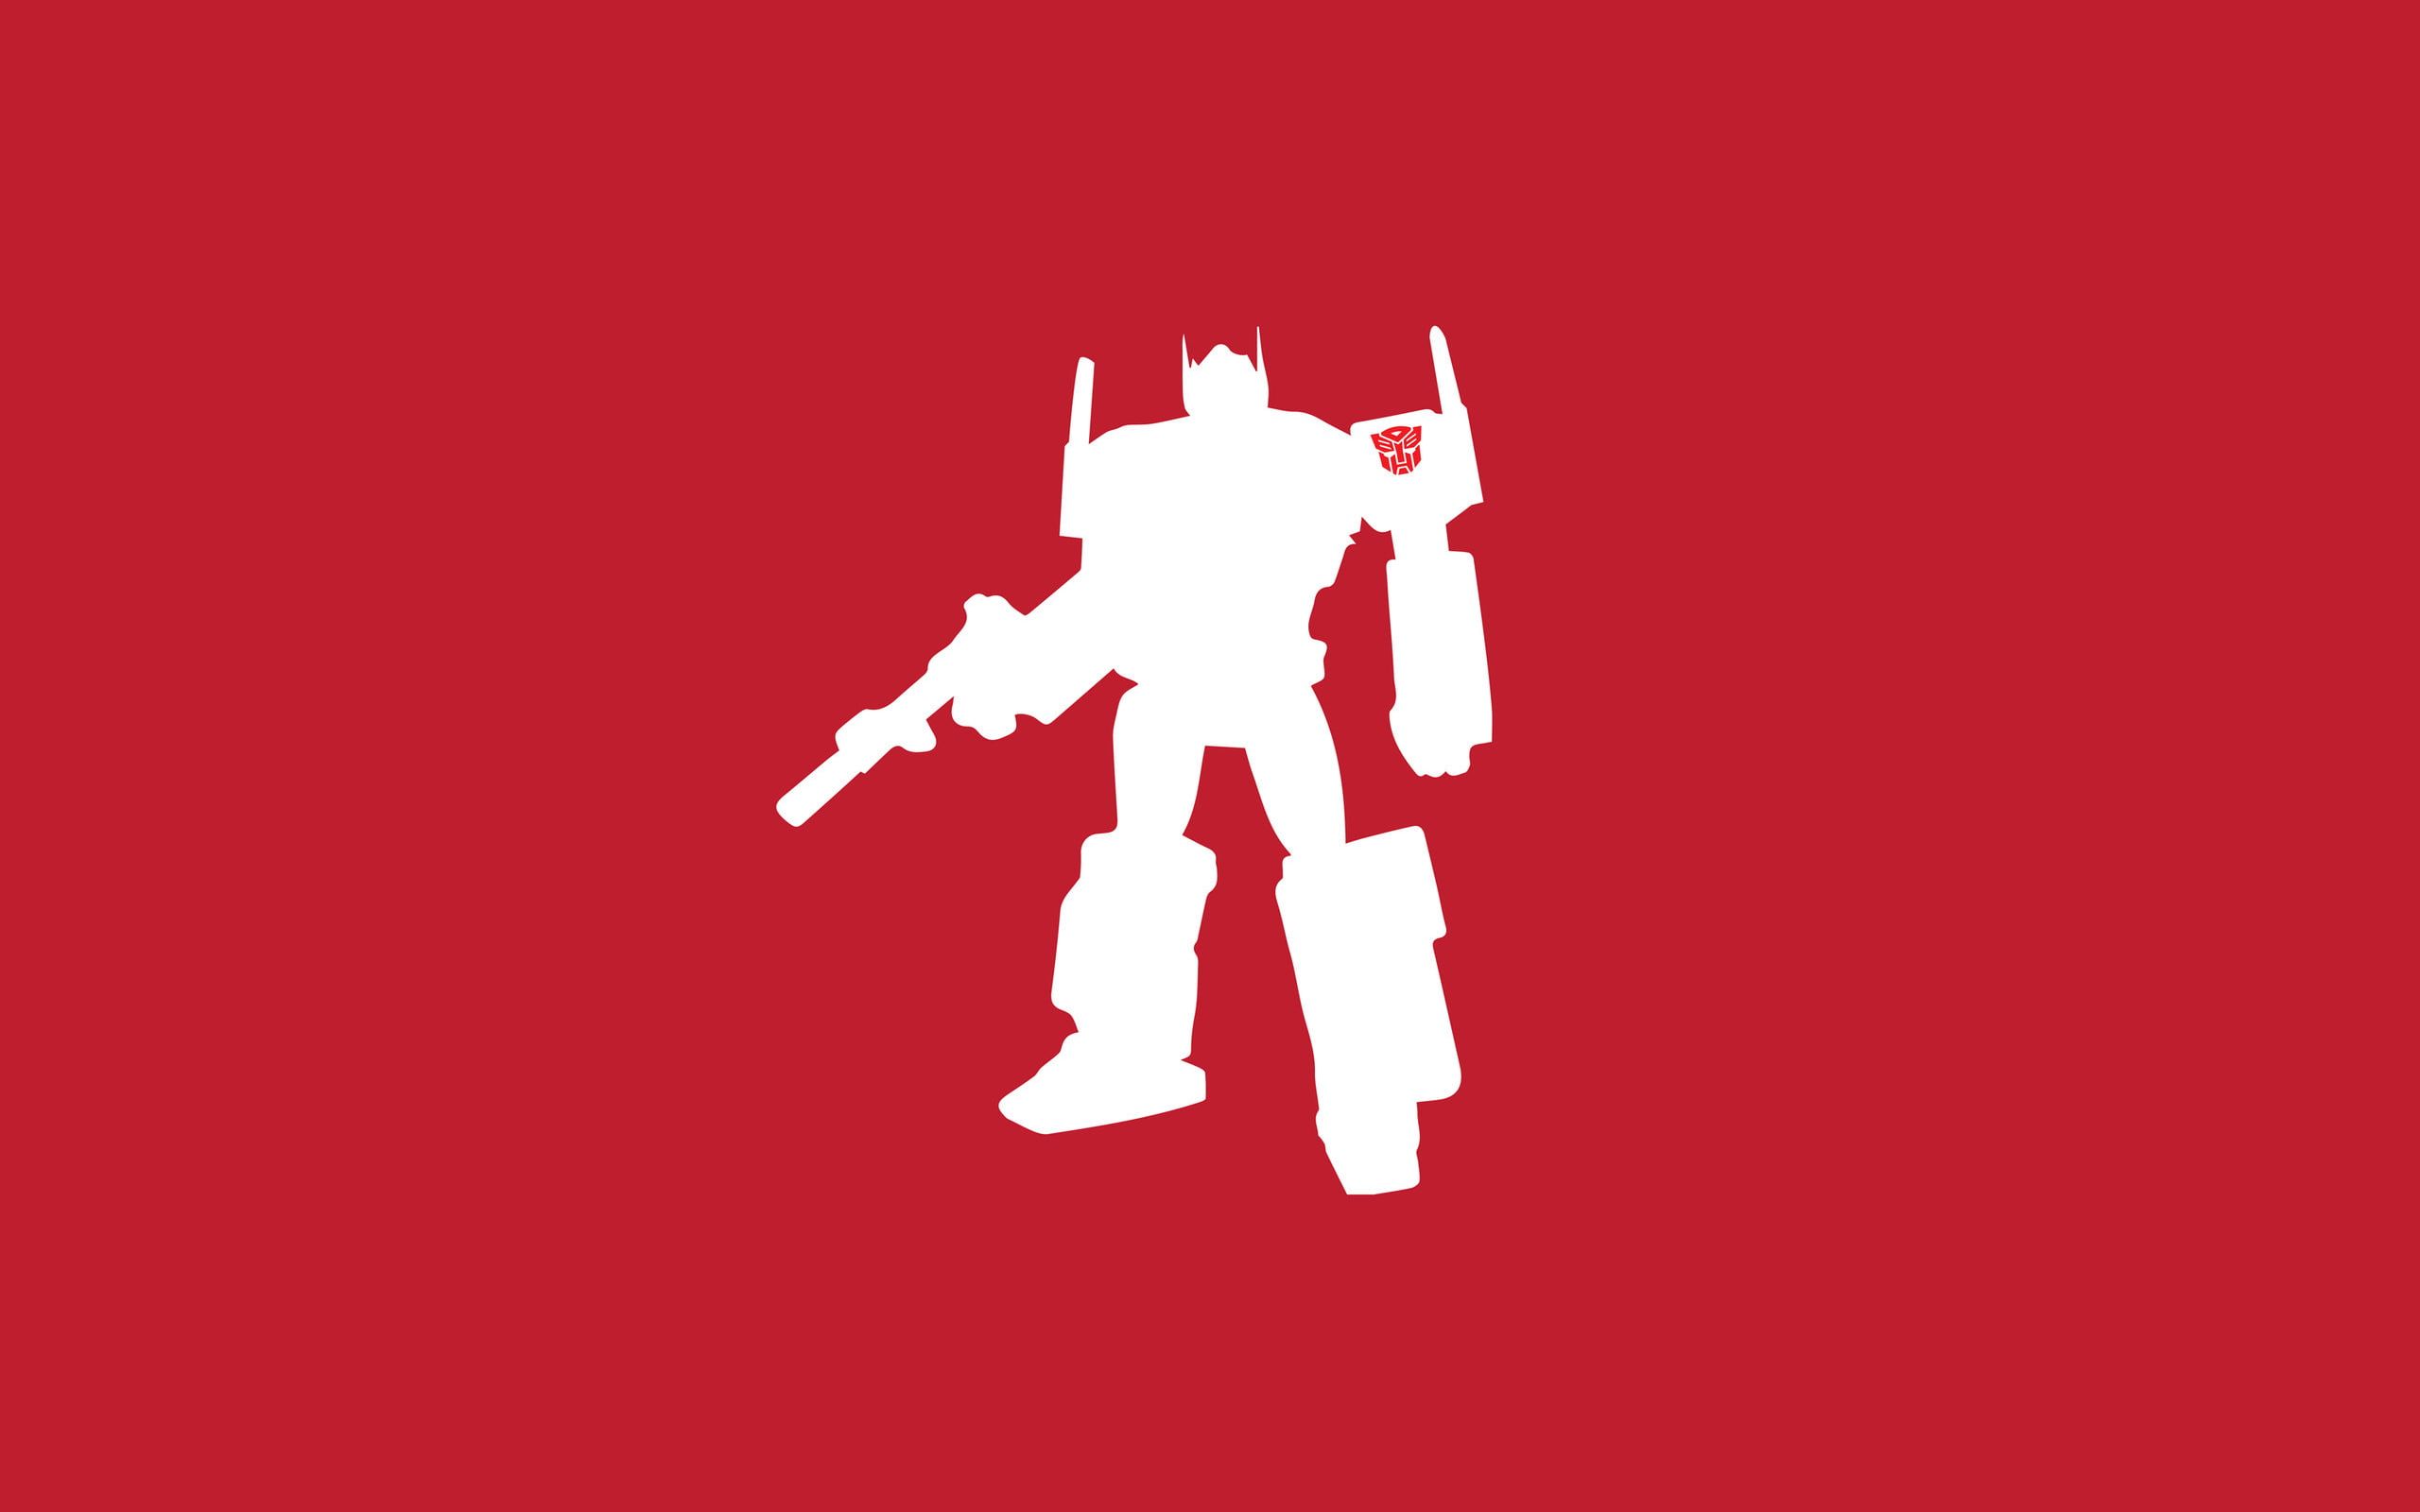 Transformers G1 Optimus Prime #silhouette #minimalism red background K # wallpaper #hdwallpaper #desktop. Optimus prime, Optimus, Red background